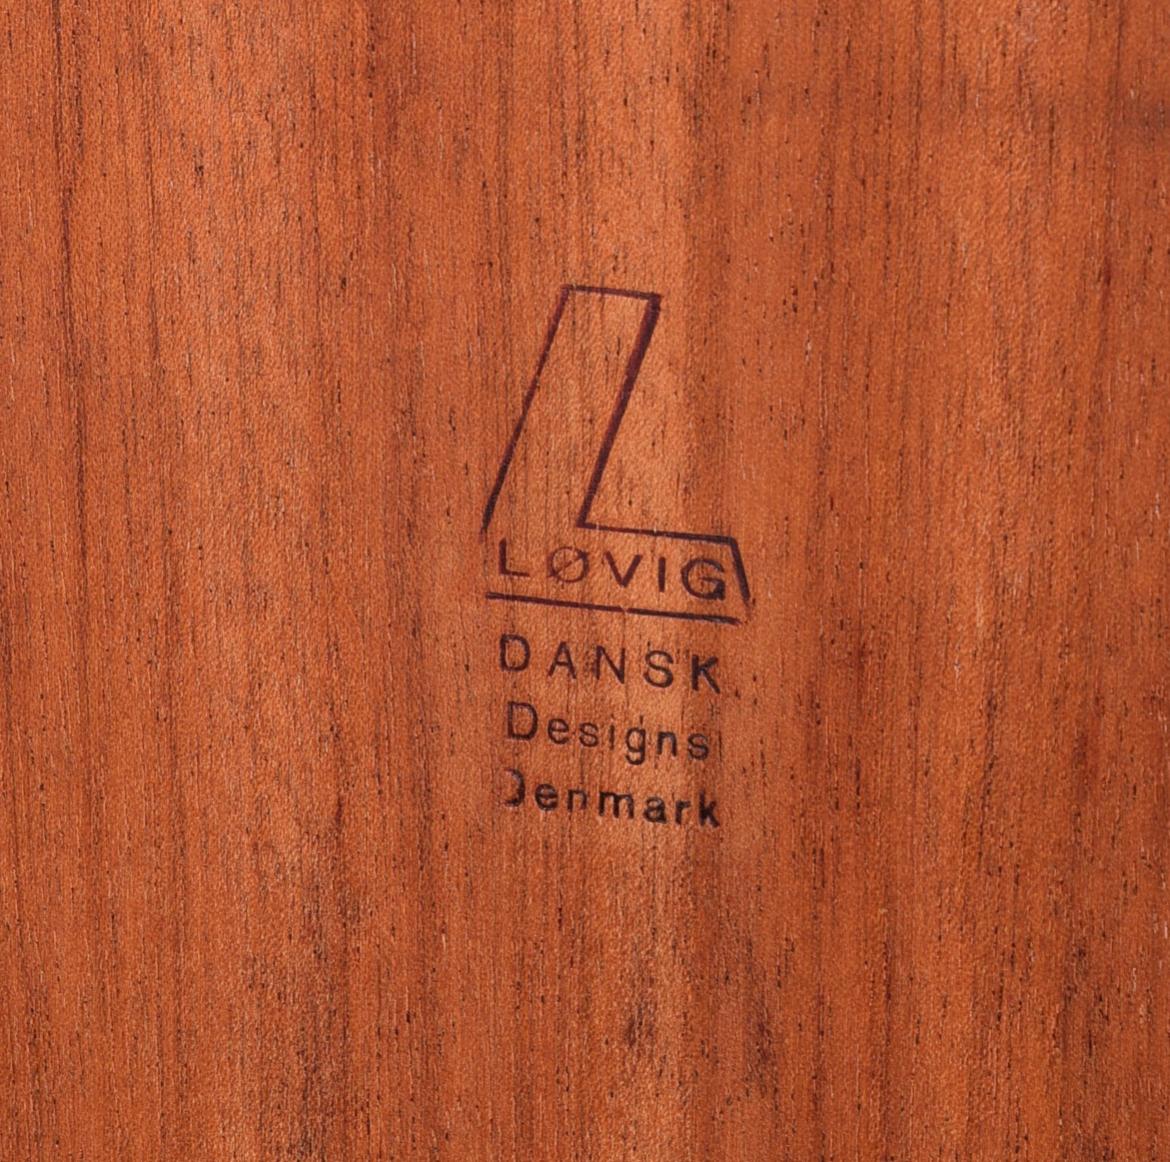 Mid century danish modern credenza flip down desk bookcase shelf unit by Lovig In Good Condition For Sale In BROOKLYN, NY